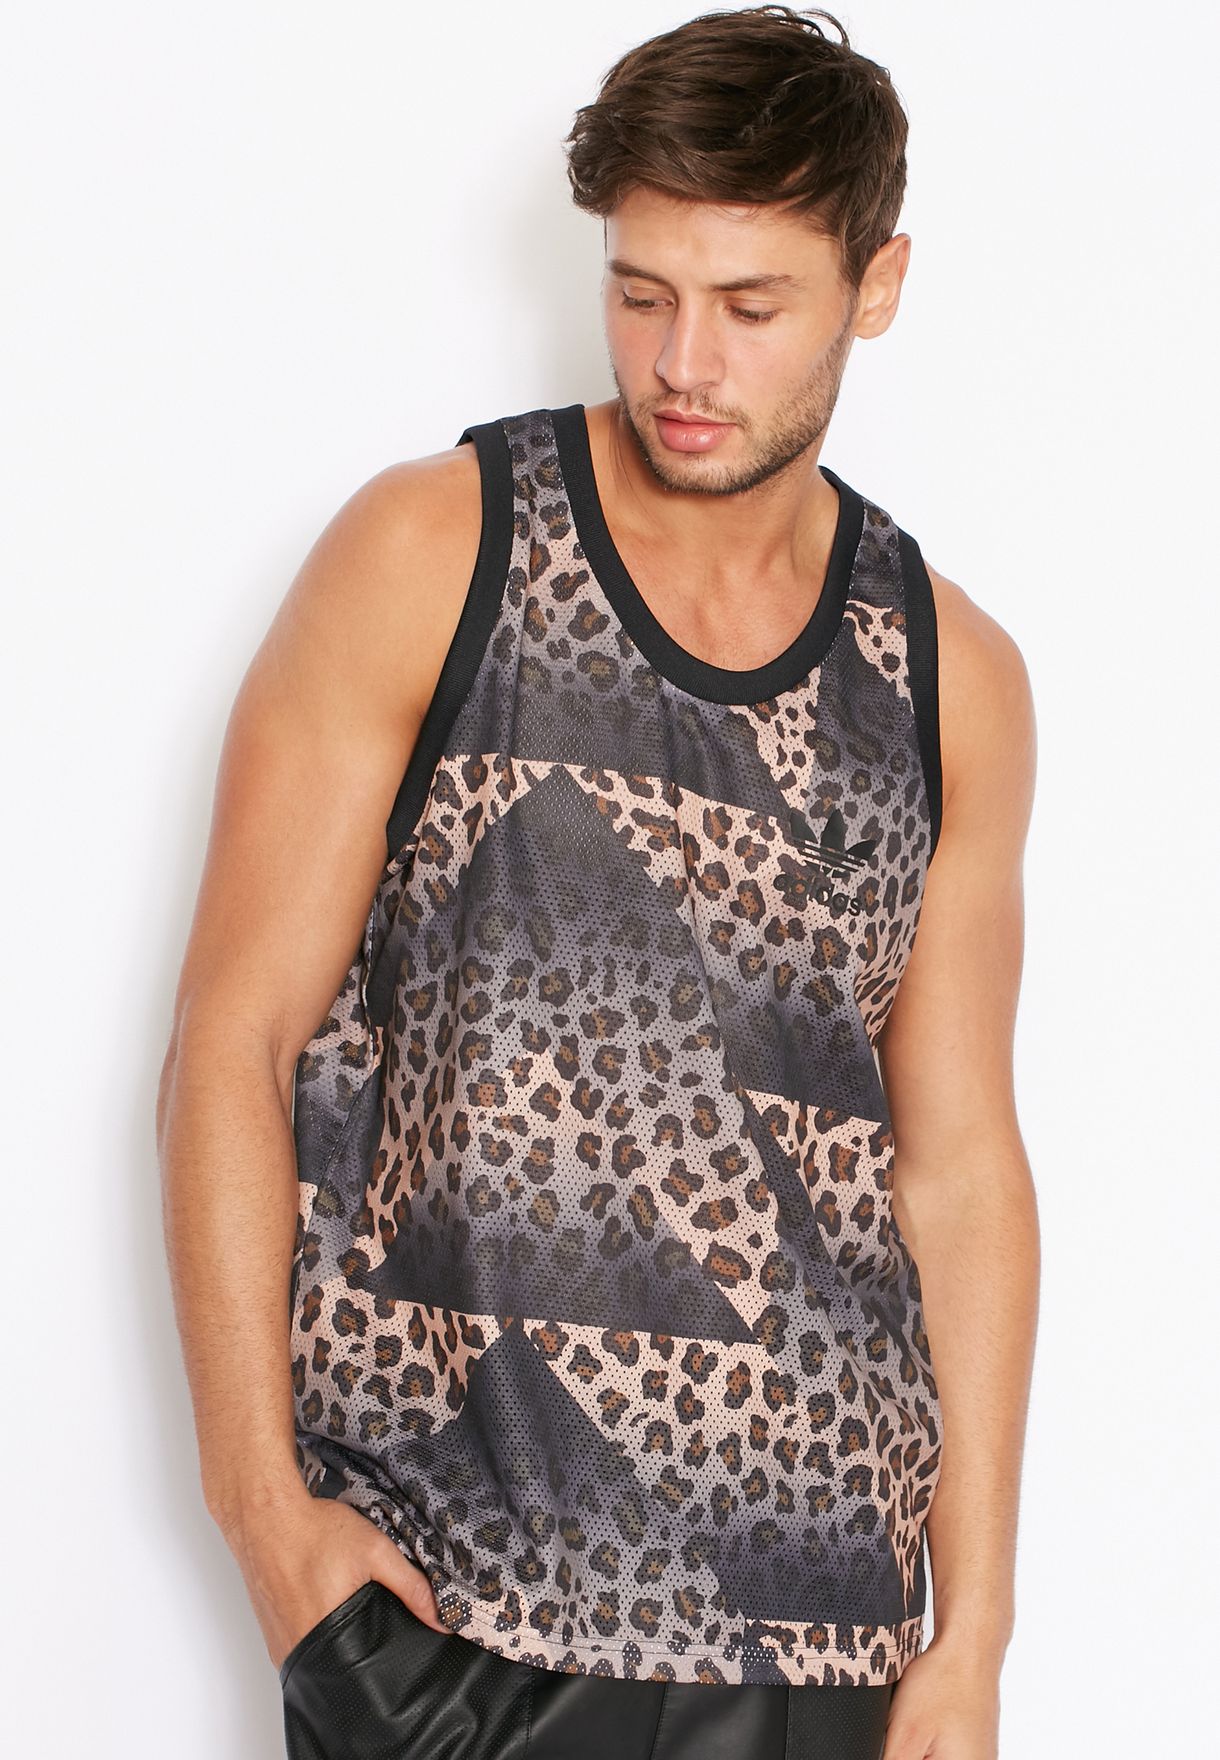 klep converteerbaar dok Buy adidas Originals prints Cheetah Print Vest for Men in MENA, Worldwide